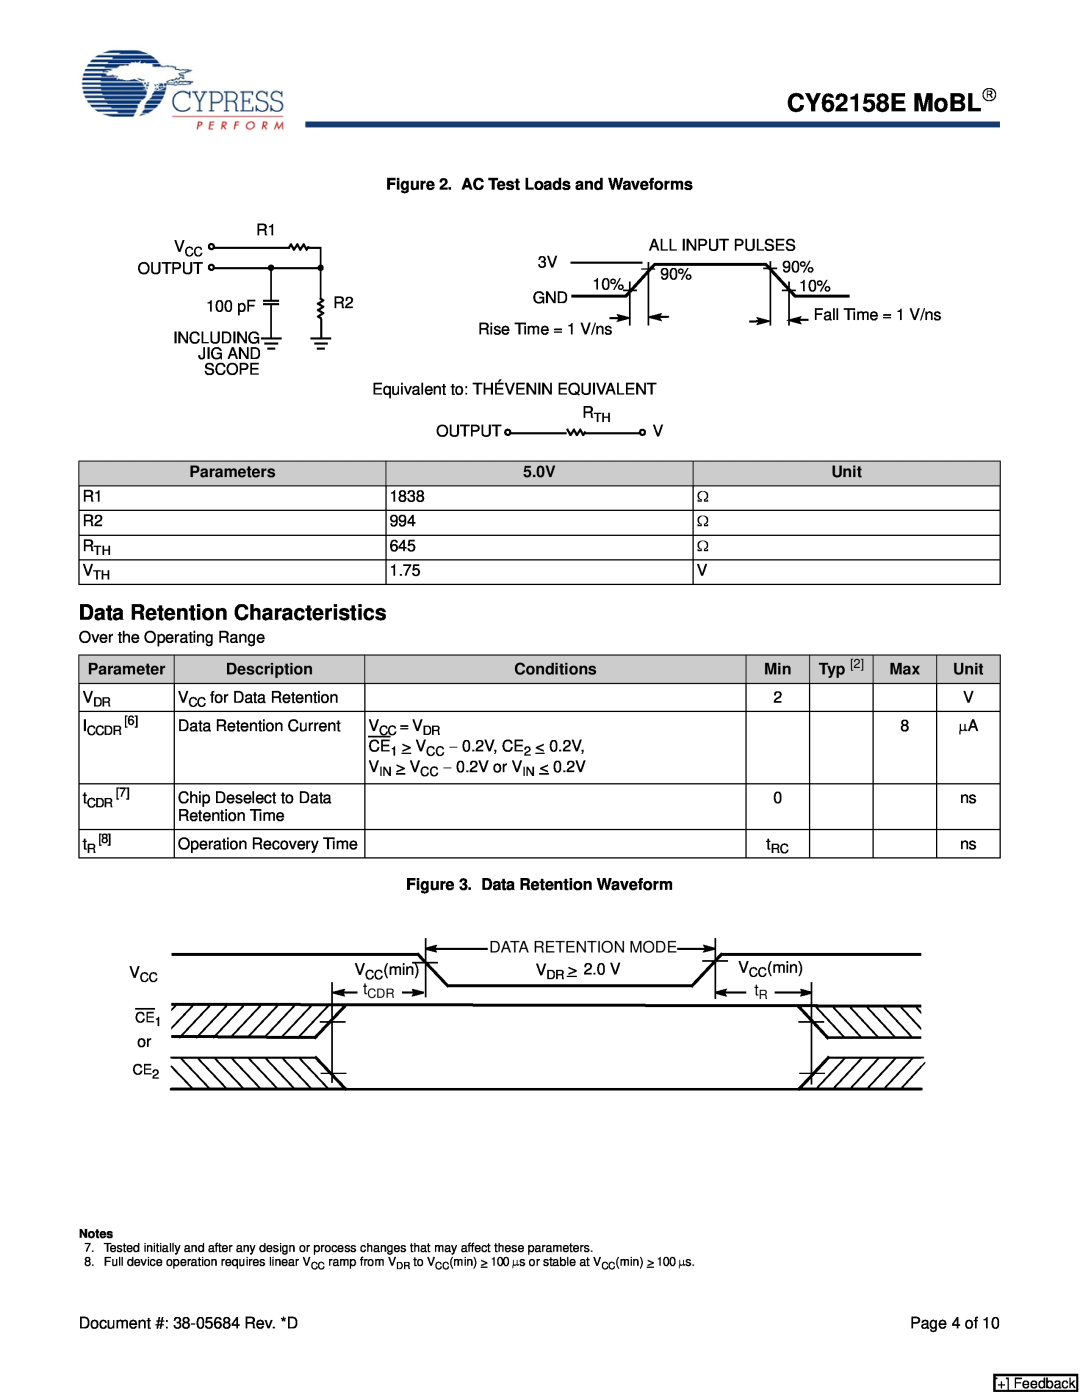 Cypress manual Data Retention Characteristics, CY62158E MoBL→ 